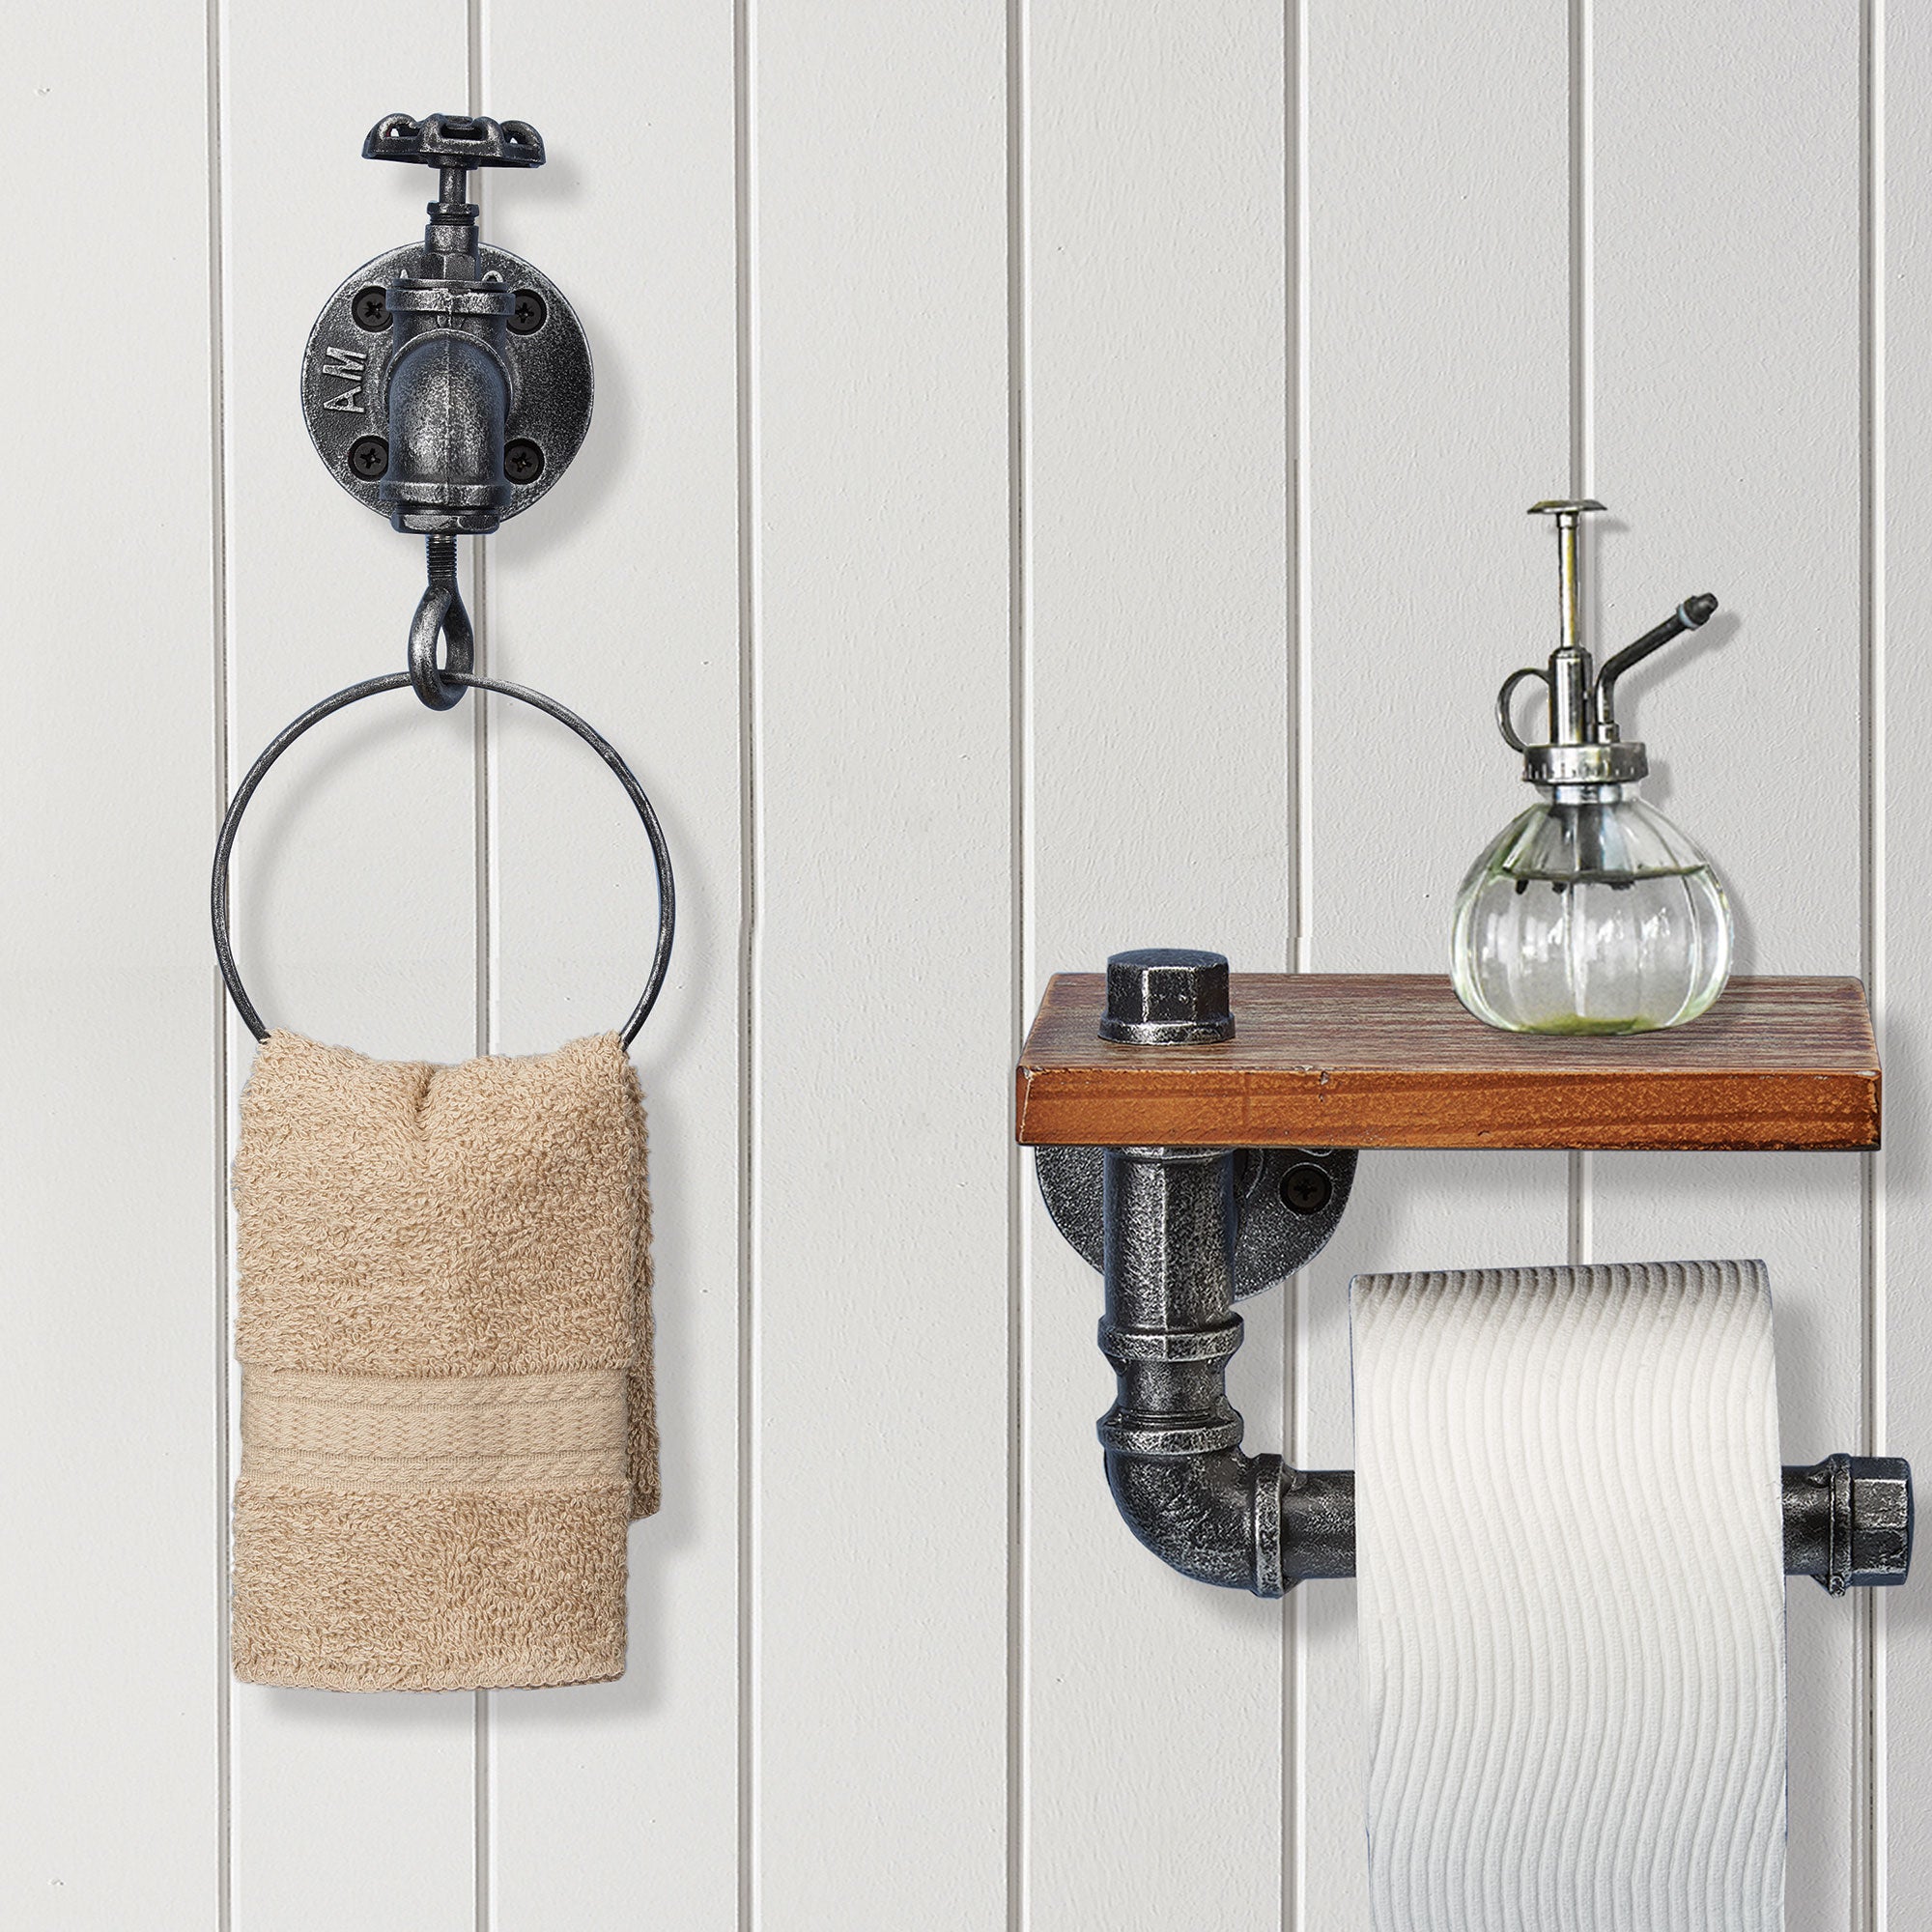 Barnyard Designs Industrial Towel Ring, Rustic Vintage Decorative